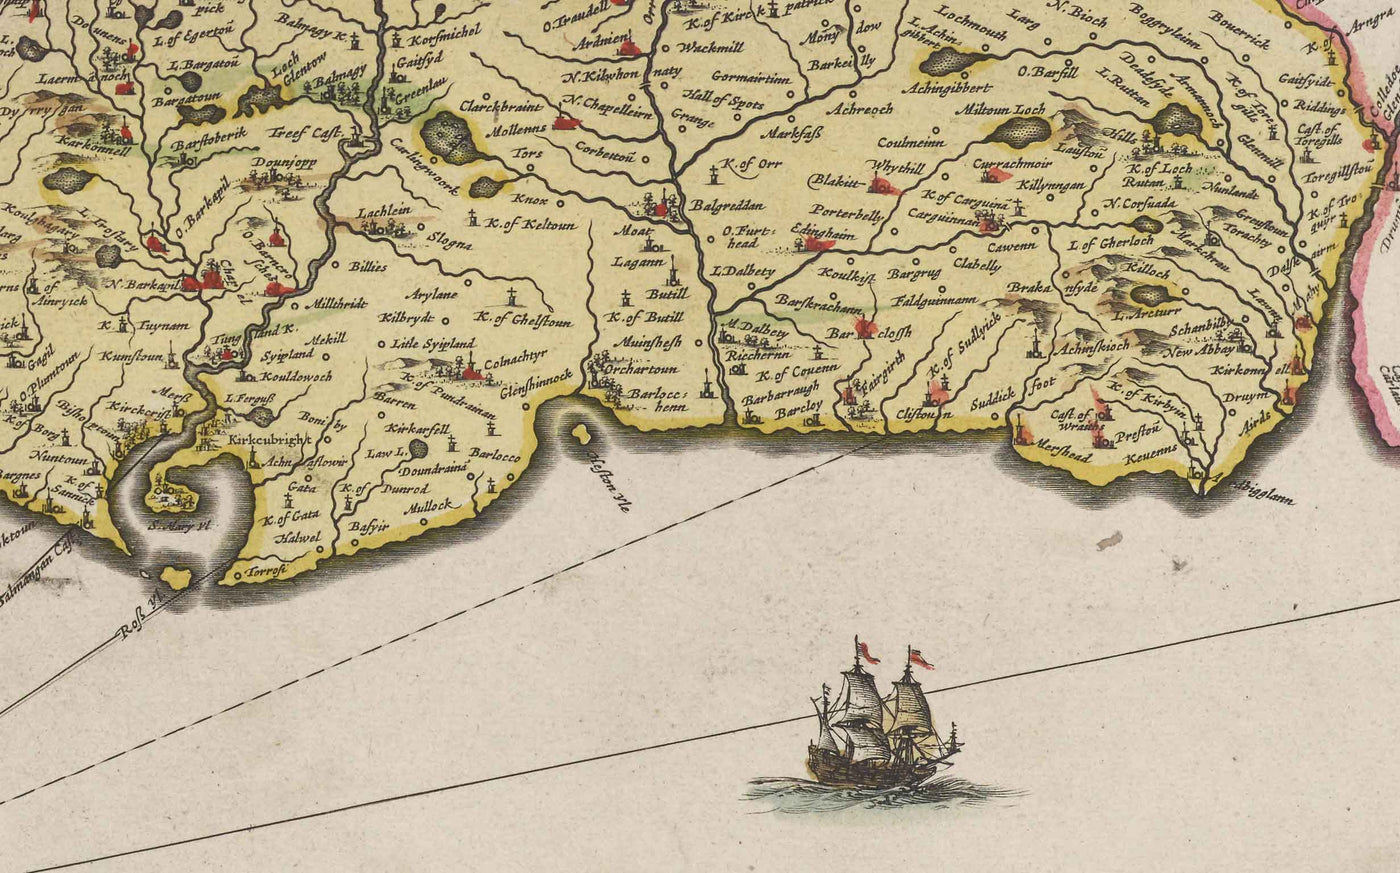 Ancienne carte de Galloway en 1665 par Joan Blaeu - Dumfries, Glenluce, Wigtown, Whithorn, Drummore